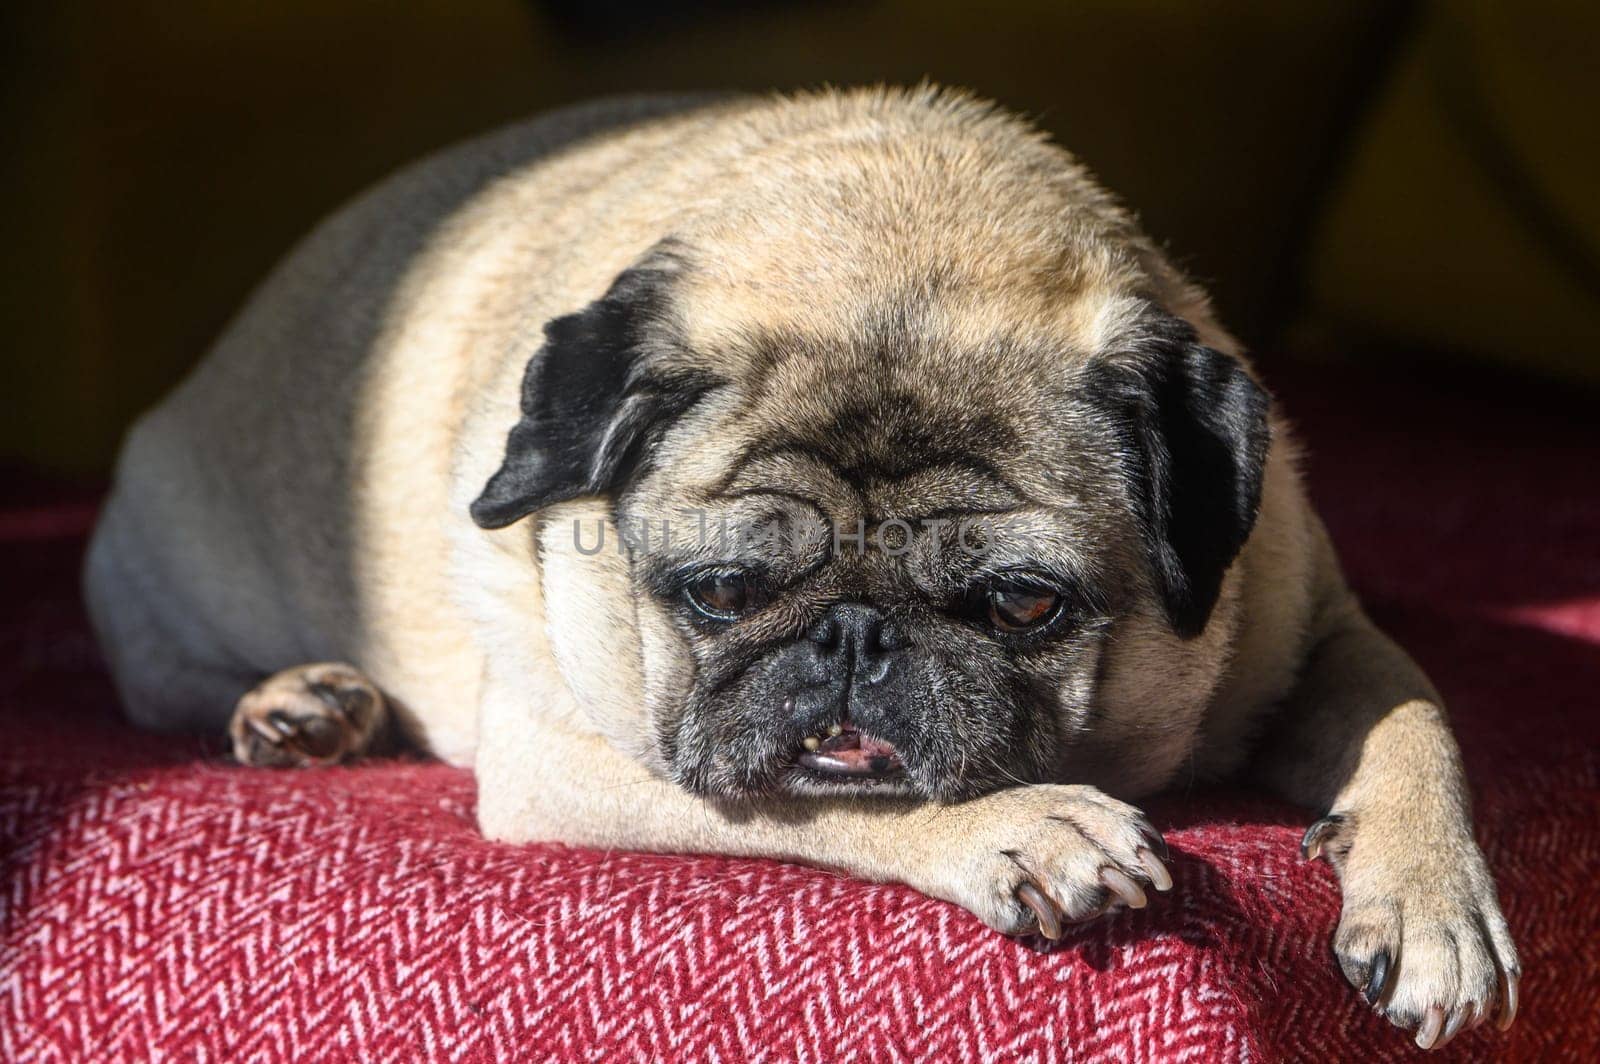 An old pug sleeps on a red sofa. by Mixa74